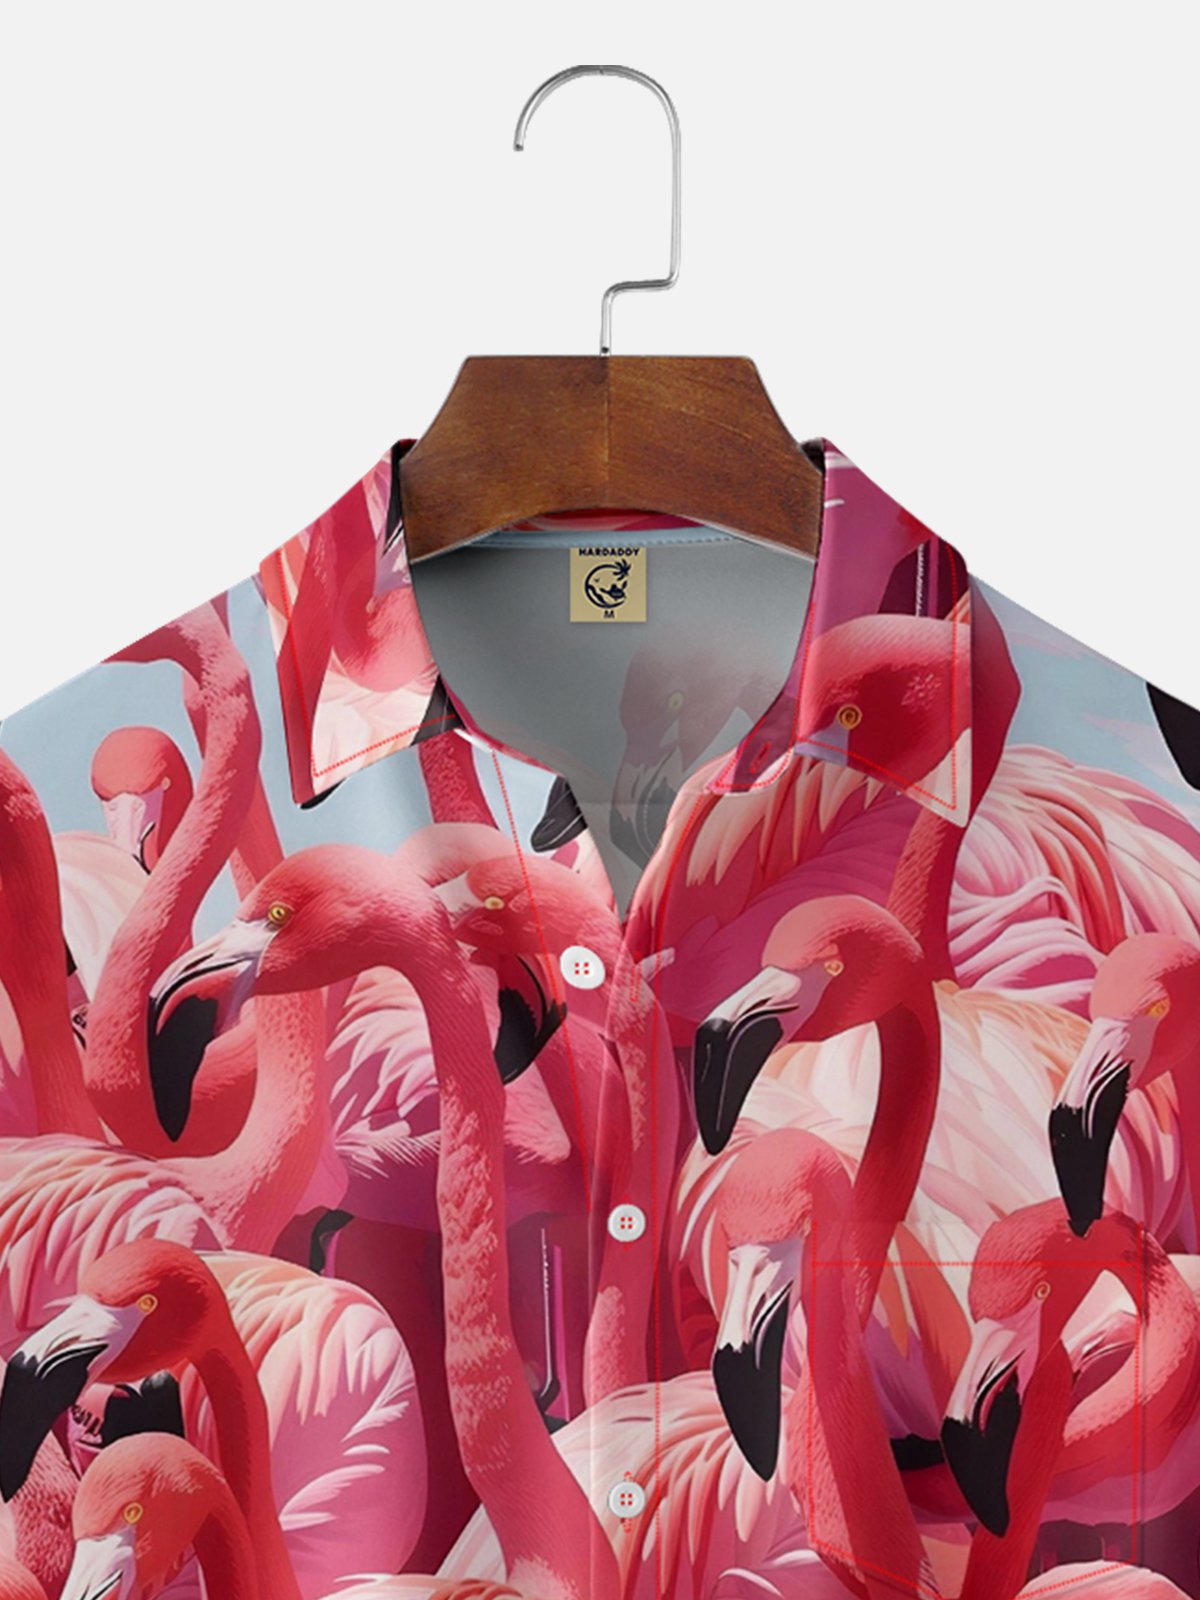 Hardaddy Pink Flamingo Chest Pocket Breathable Hawaiian Shirt